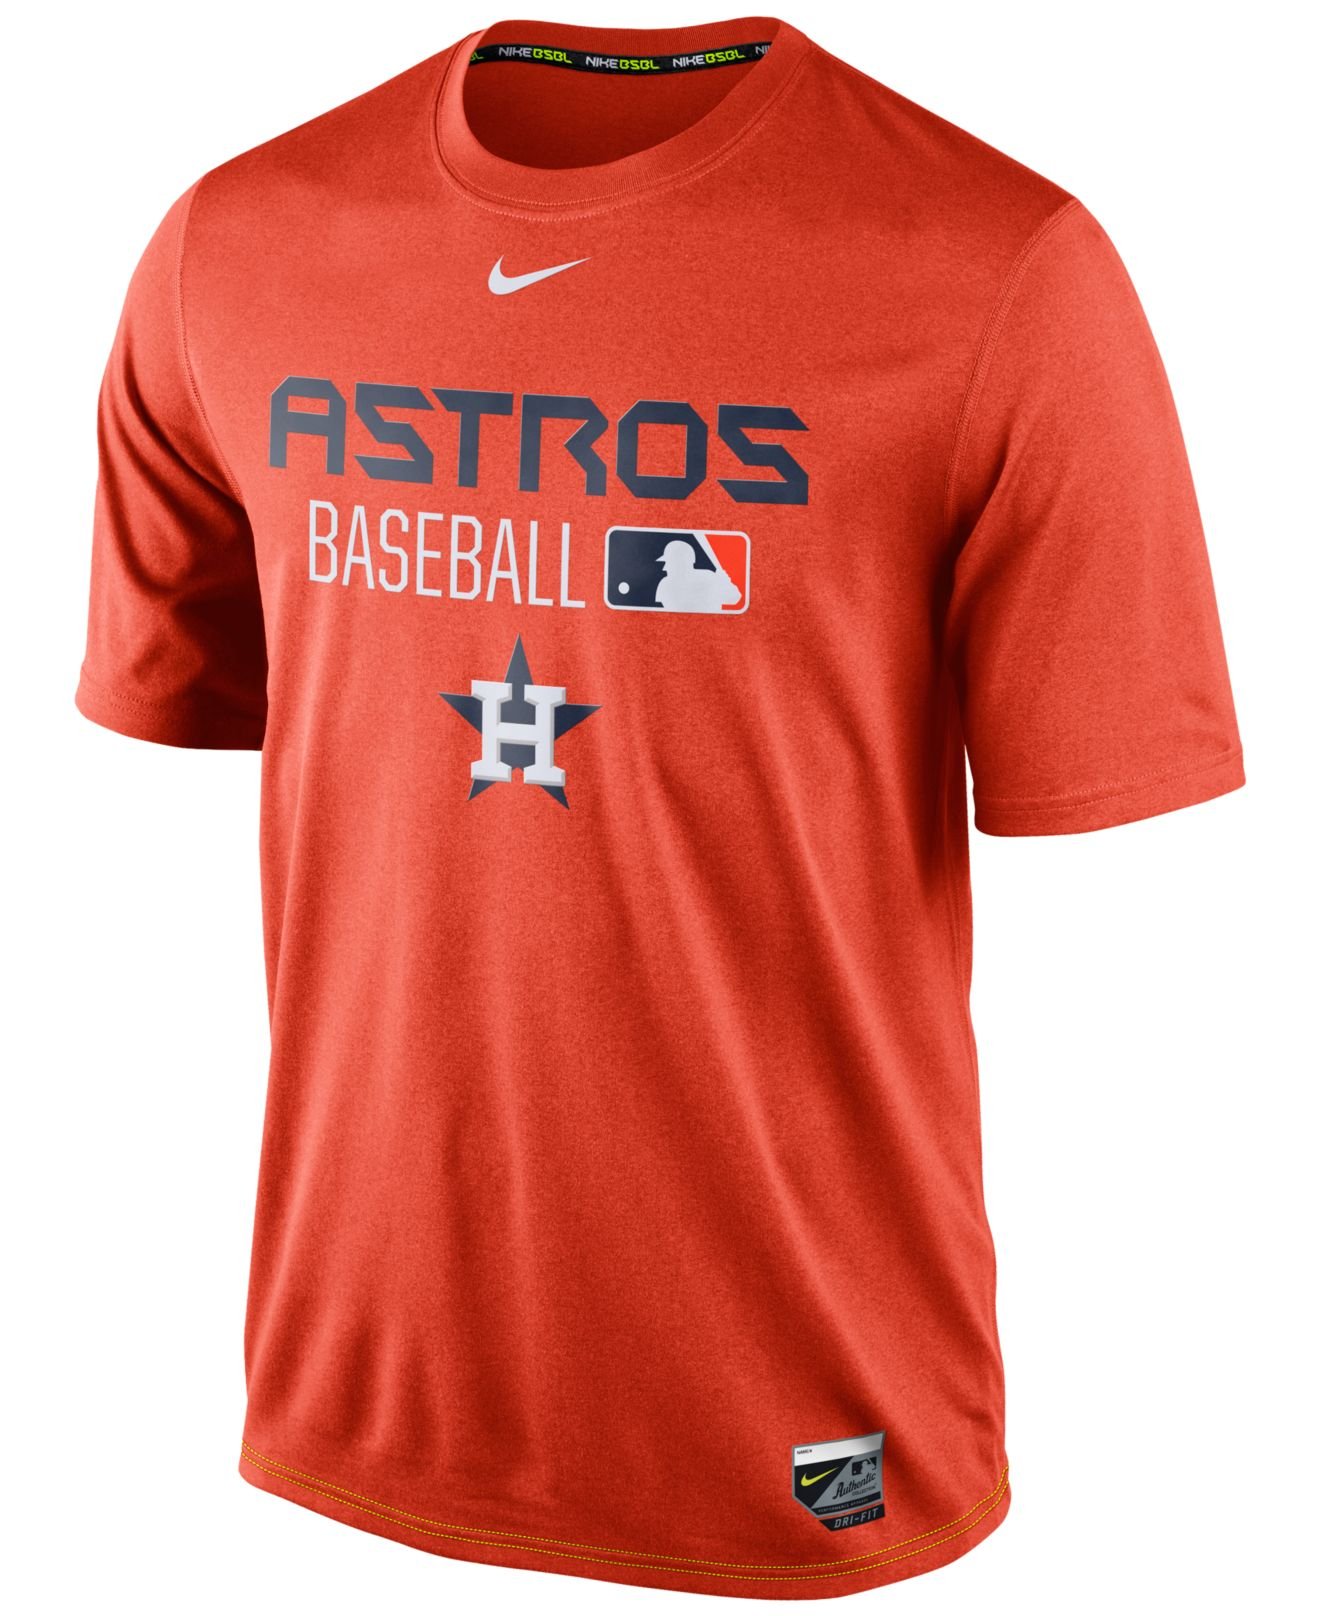 Lyst - Nike Men'S Houston Astros Legend Dri-Fit T-Shirt in Orange for Men